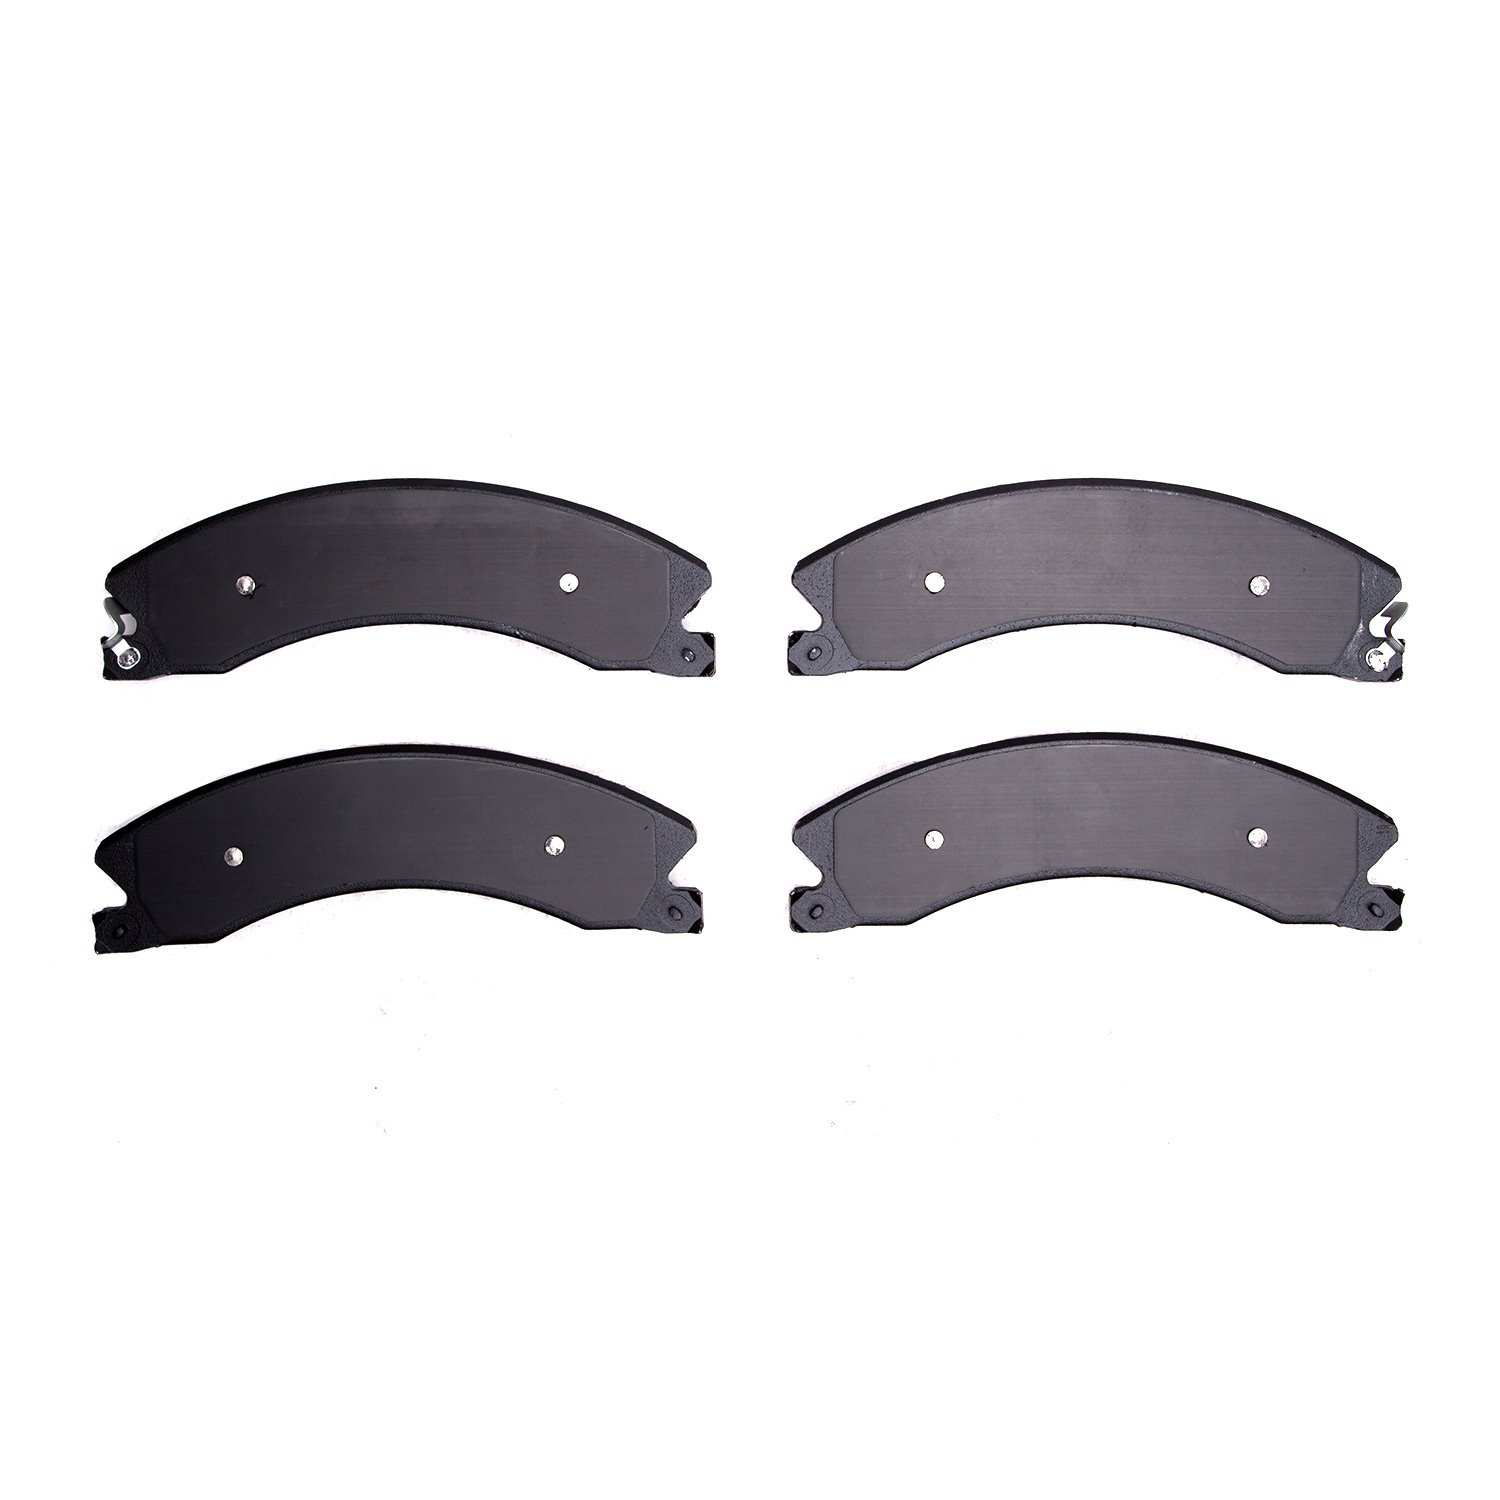 1400-1565-00 Ultimate-Duty Brake Pads Kit, Fits Select Multiple Makes/Models, Position: Fr,Front,Rear,Rr